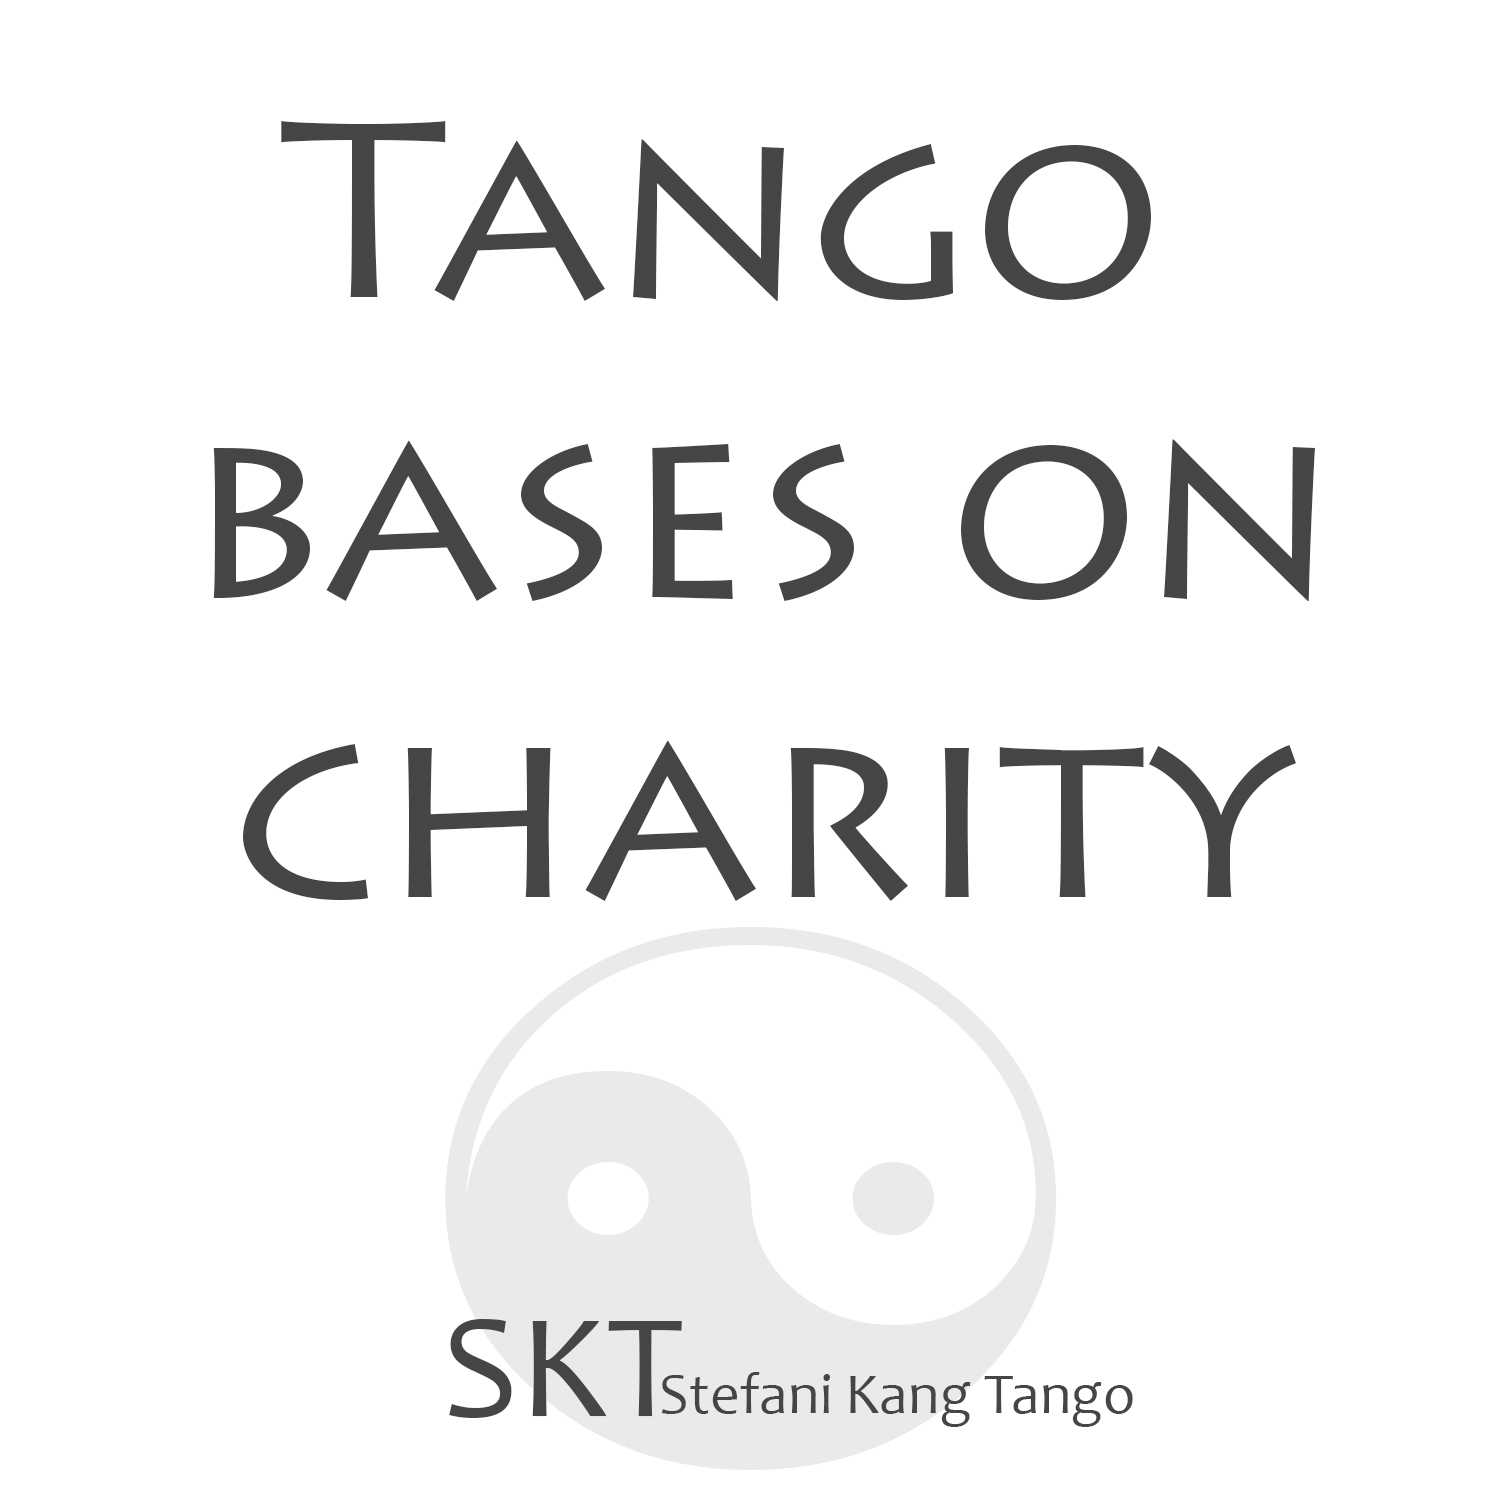 Tango charity - tango quote